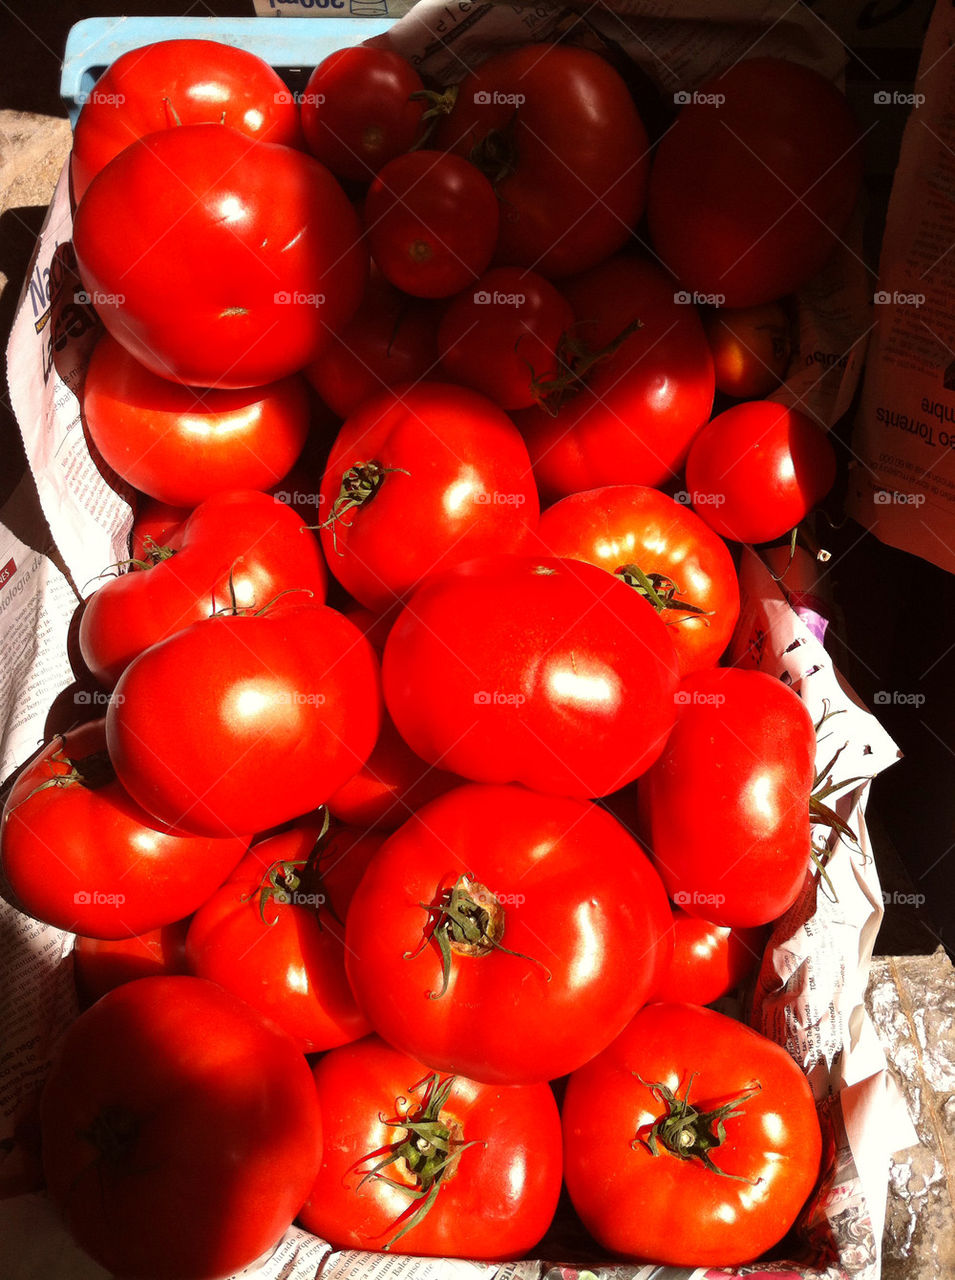 red tomato salad spain by javierrecuero